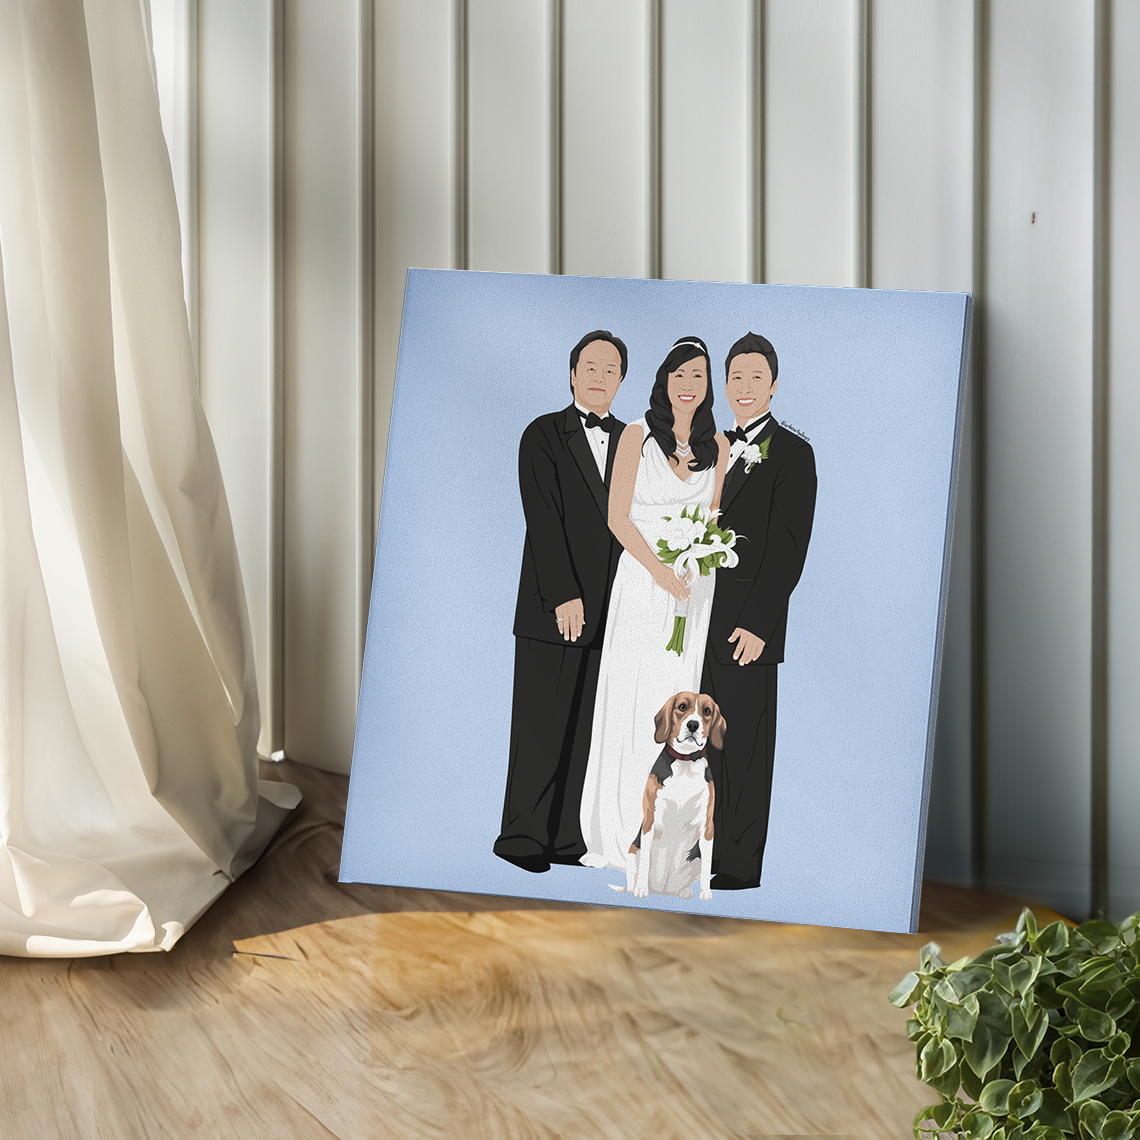 Custom Digital Family Portrait (Pop-Art Style)